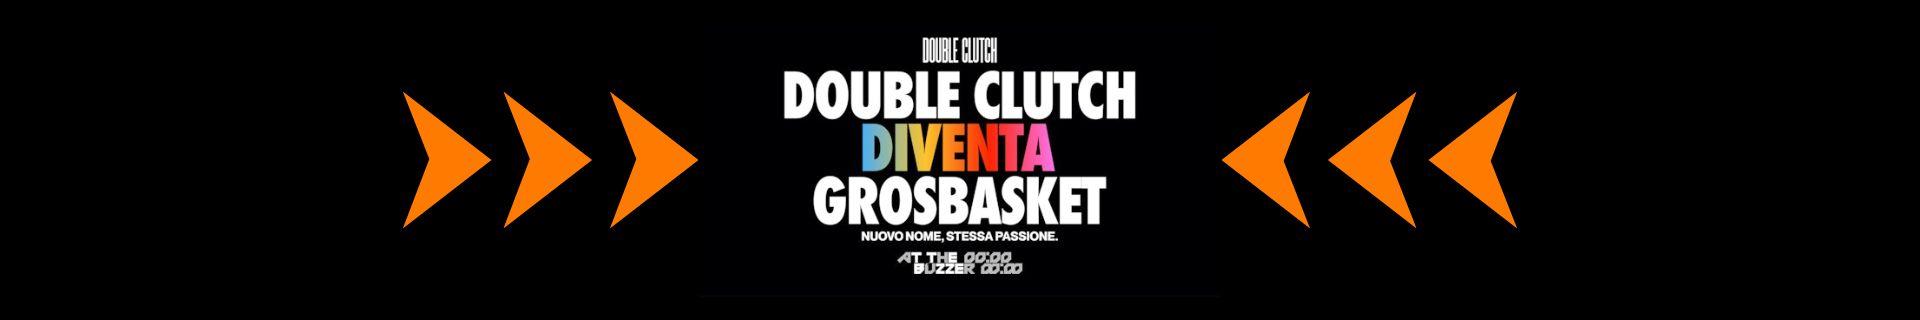 Grosbasket Double Clutch